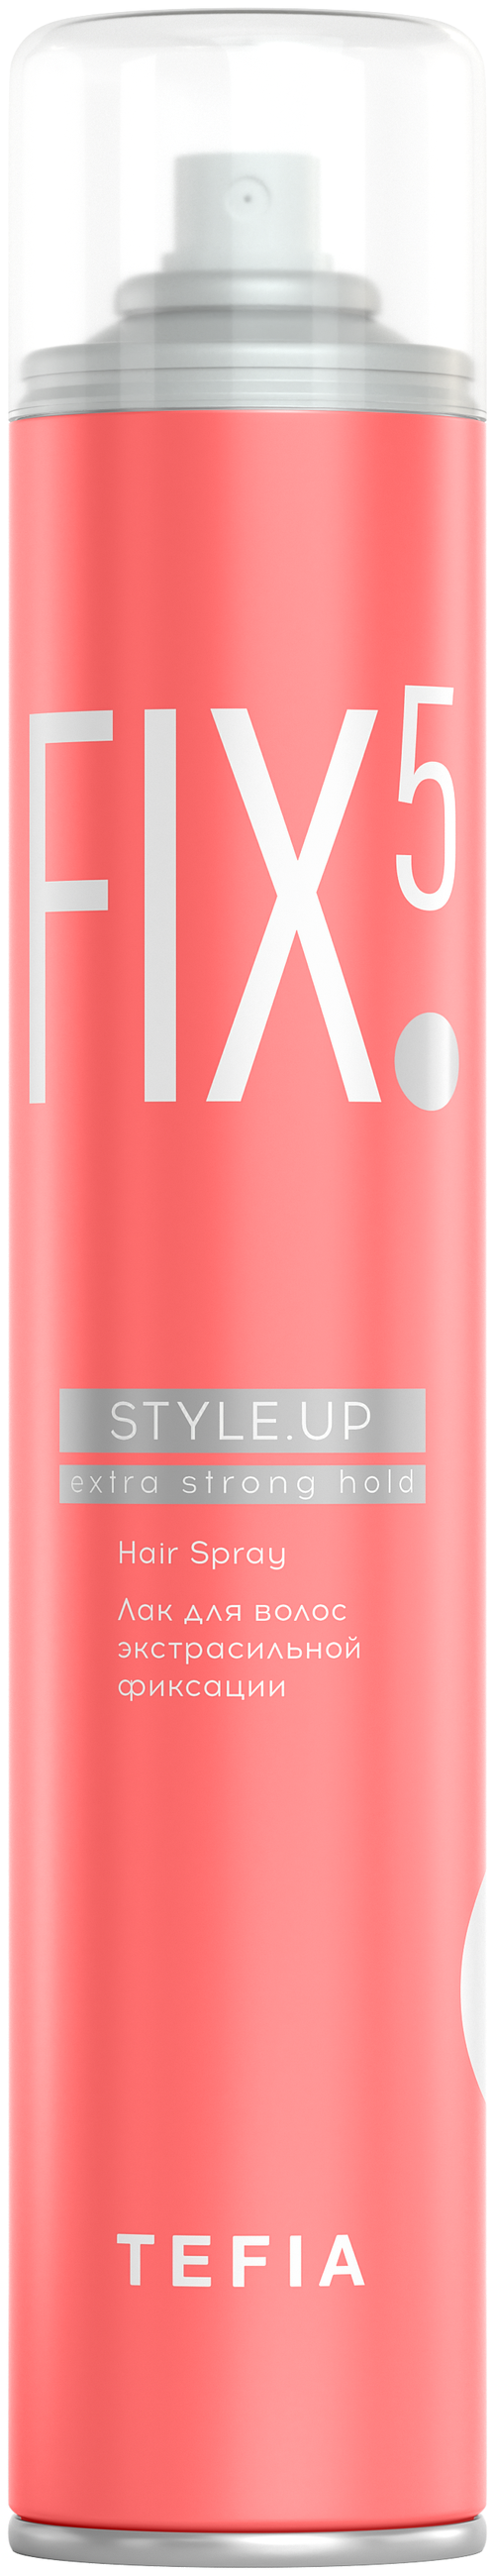 Tefia Style.Up лак для волос Hair Spray Extra Strong Hold, экстрасильная фиксация, 500 мл